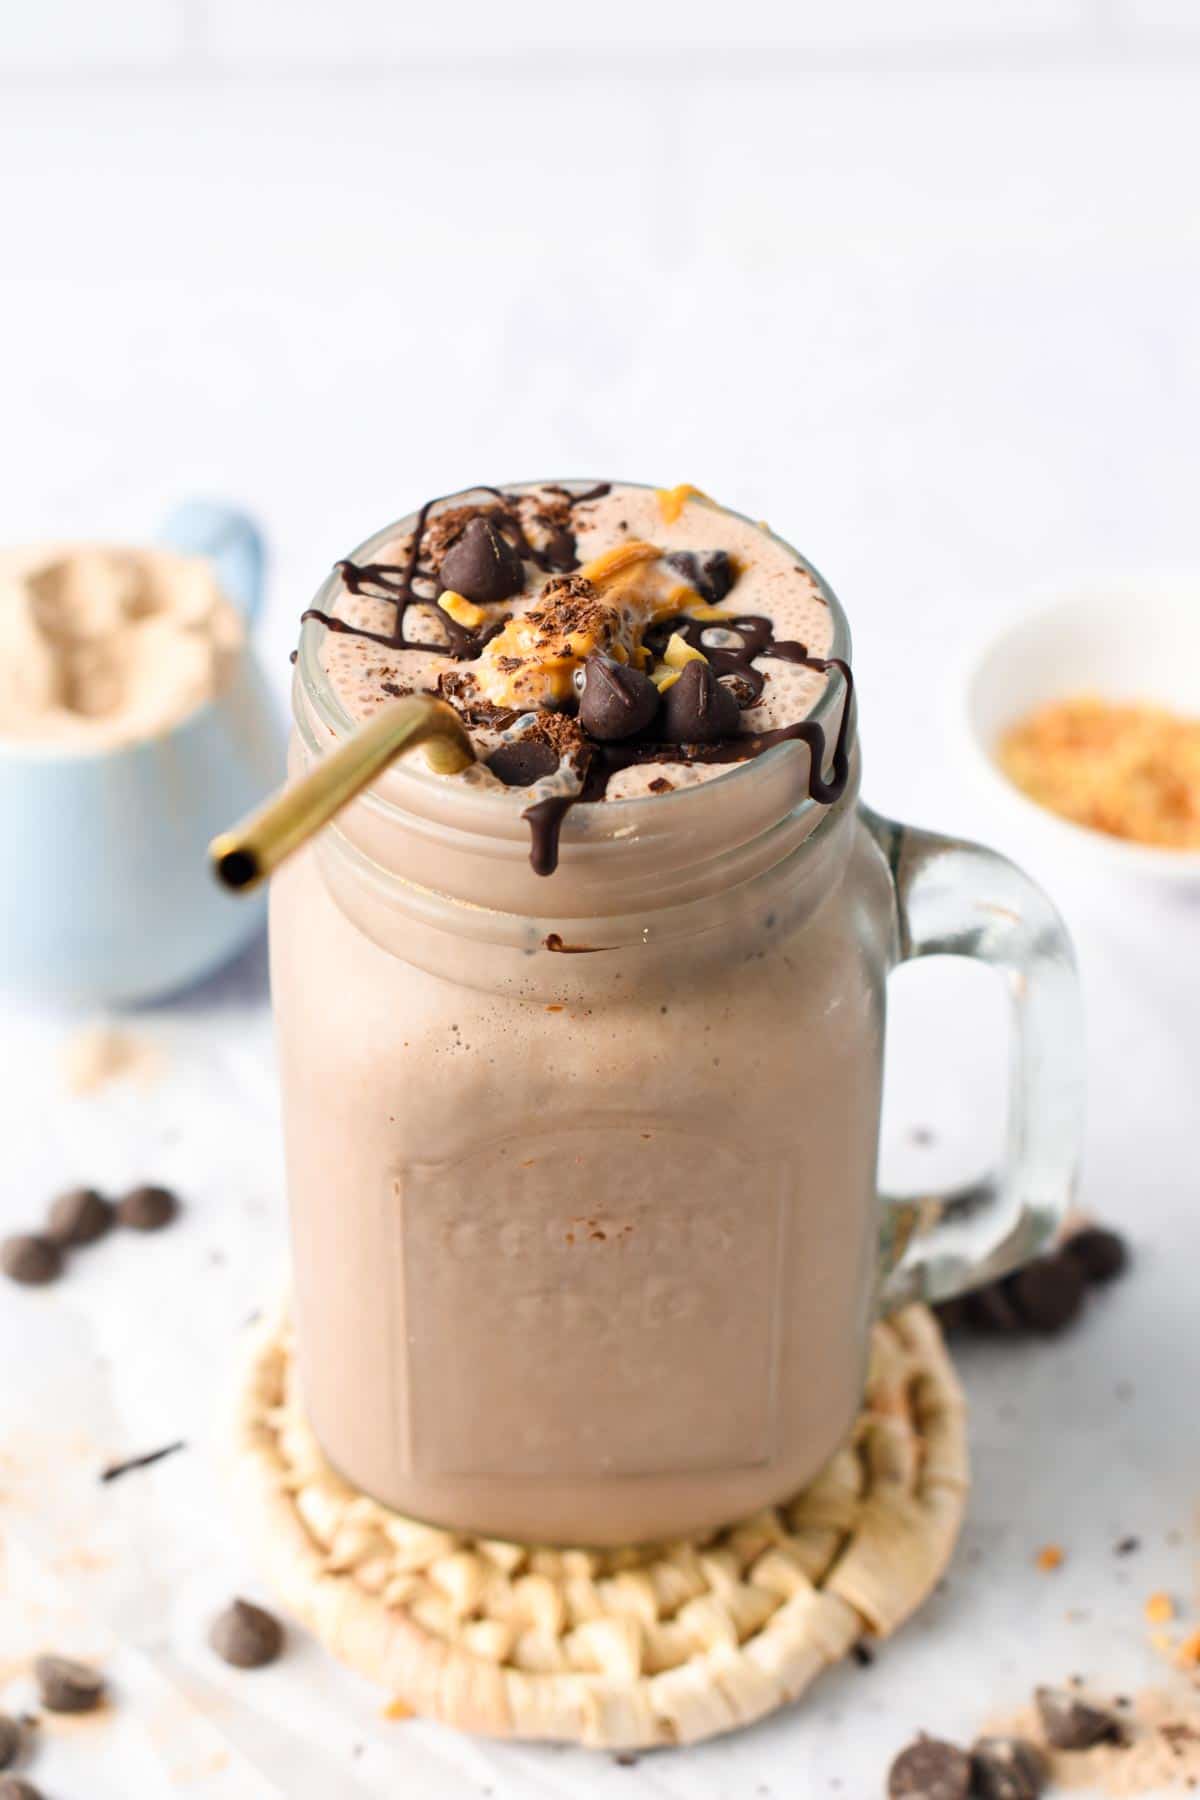 Keto Shake Recipe - Easy and Delicious Keto Chocolate Shake